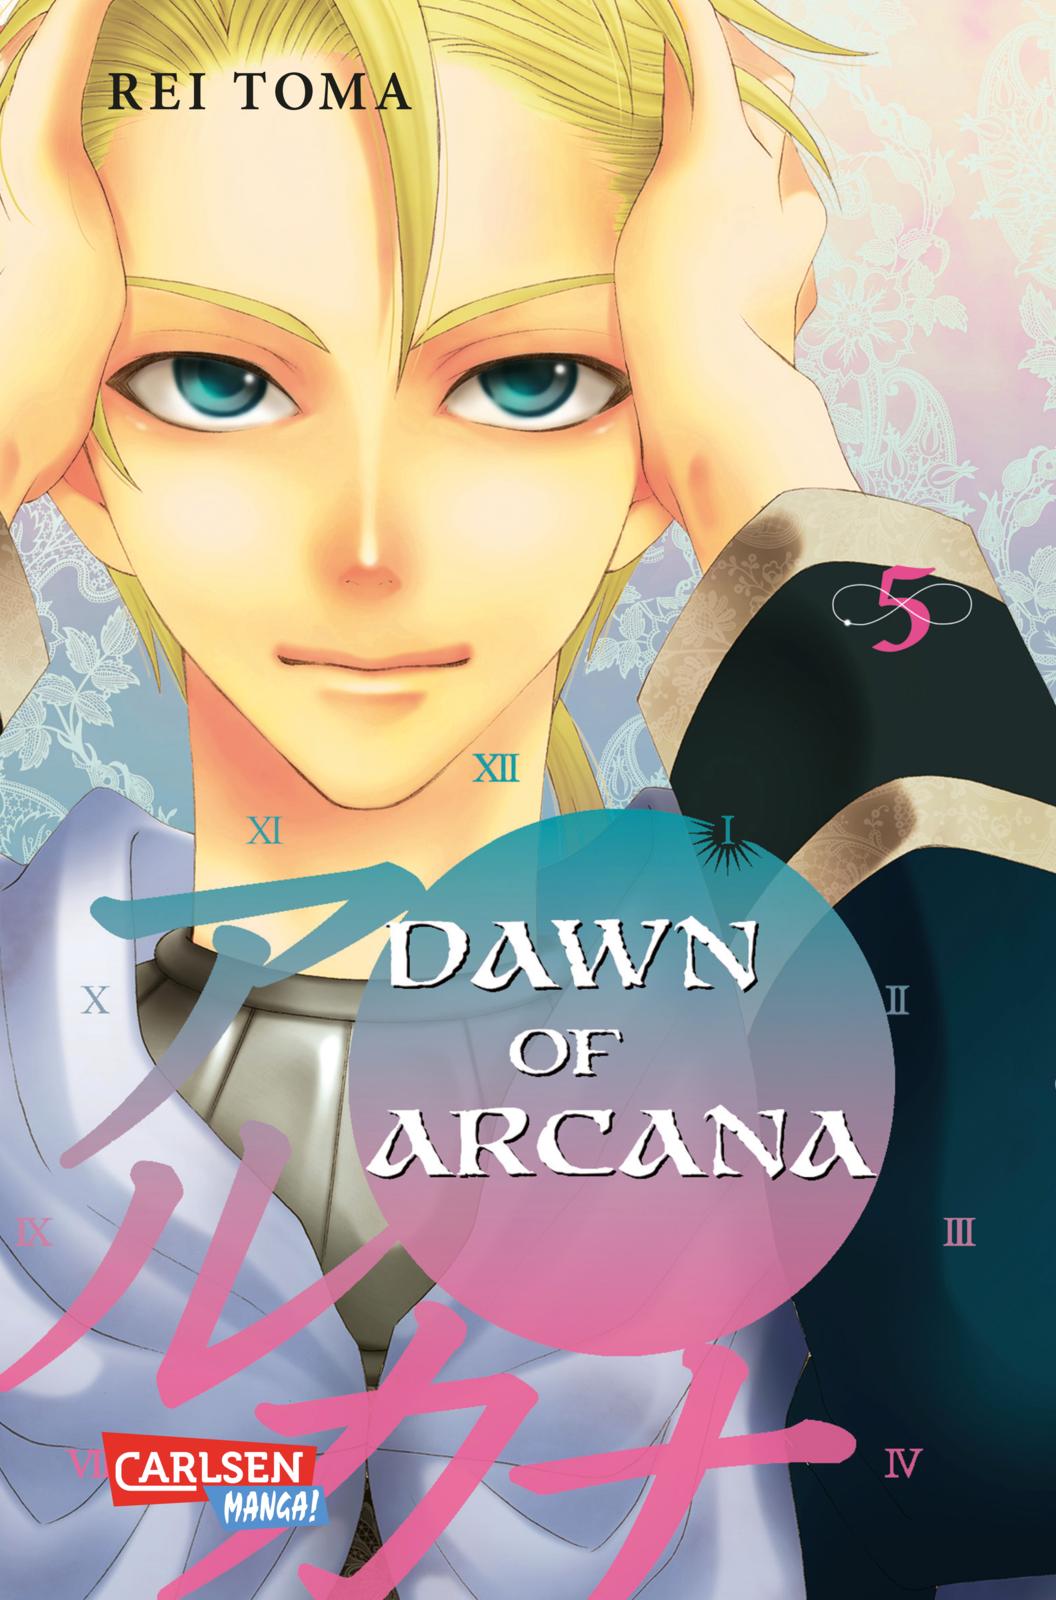 Dawning manhwa. Манга Arcana. Manga Dawn of the Prince. Reimei no Arcana Manga Volume.